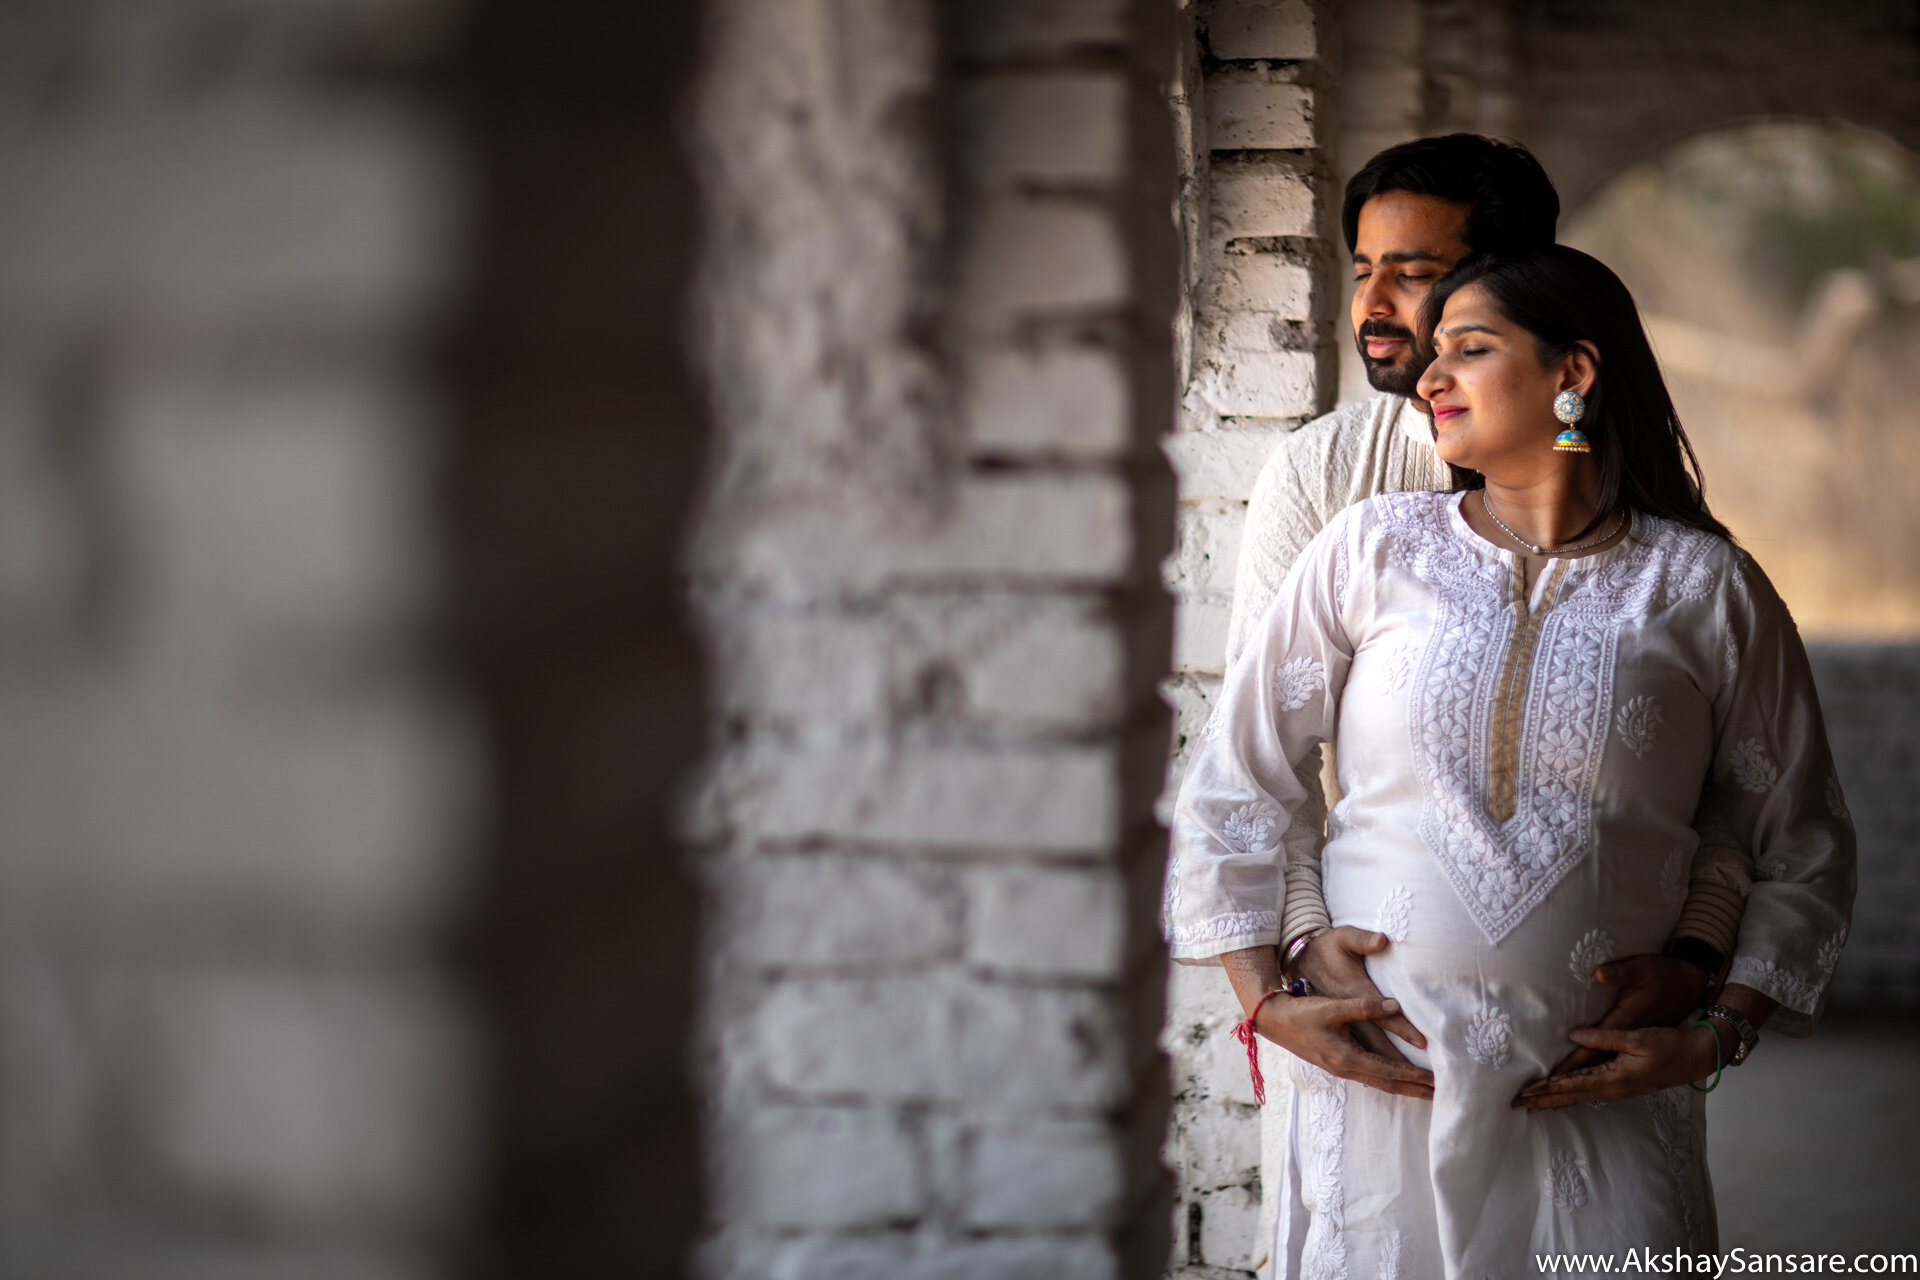 Anuj x Malvika + 1 Akshay Sansare Photography & Films Candid Photographer Best in mumbai Cinematic wedding films-17.jpg